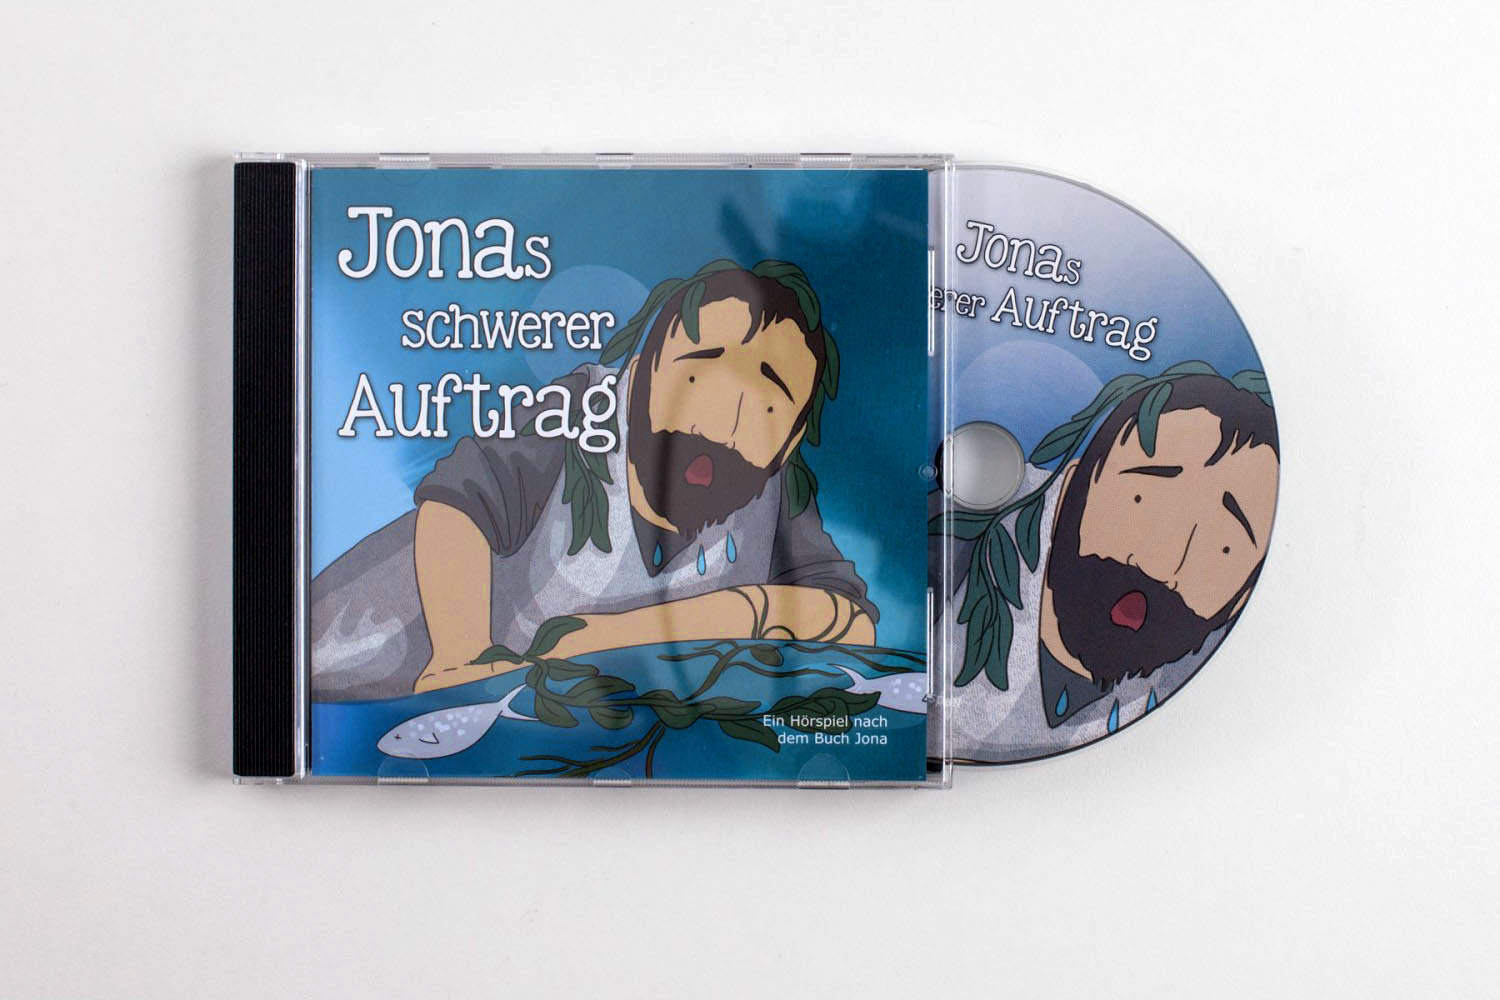 Jonas schwerer Auftrag - CD